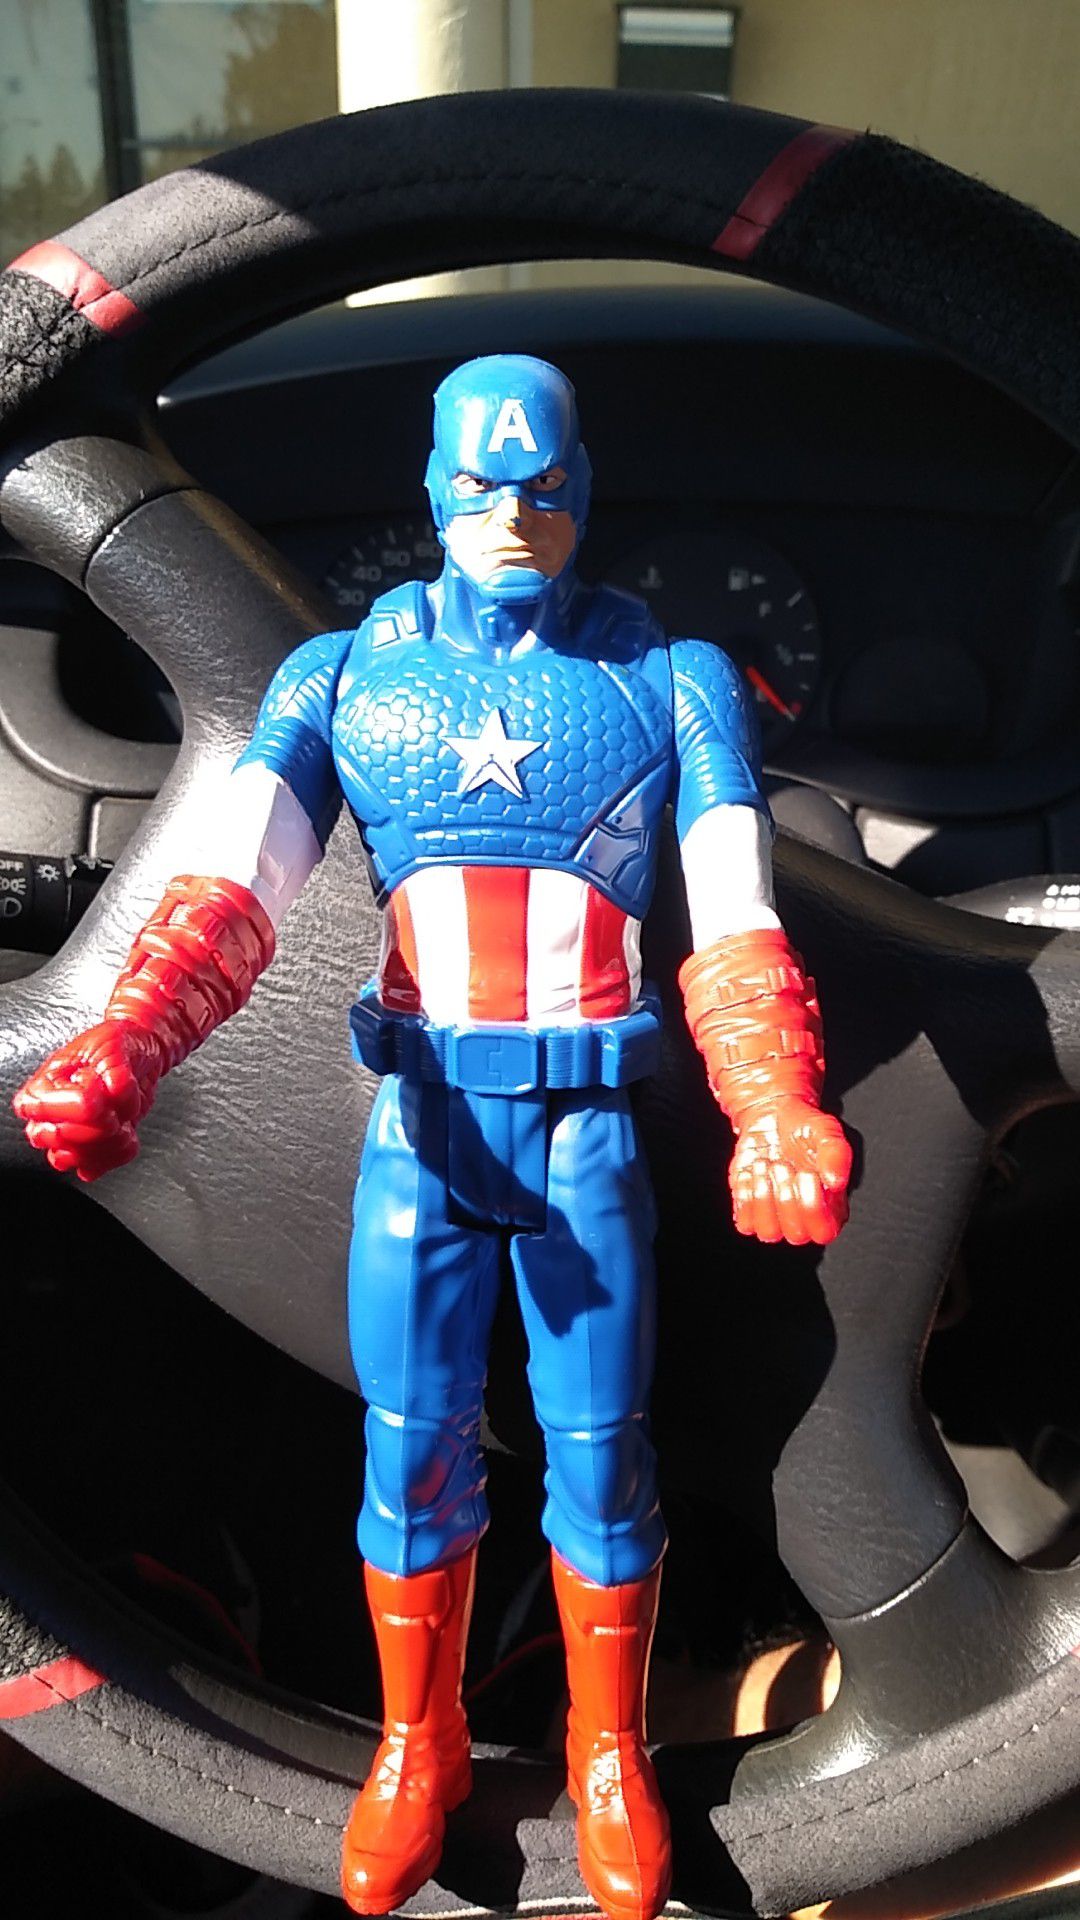 Captain America action figure toy